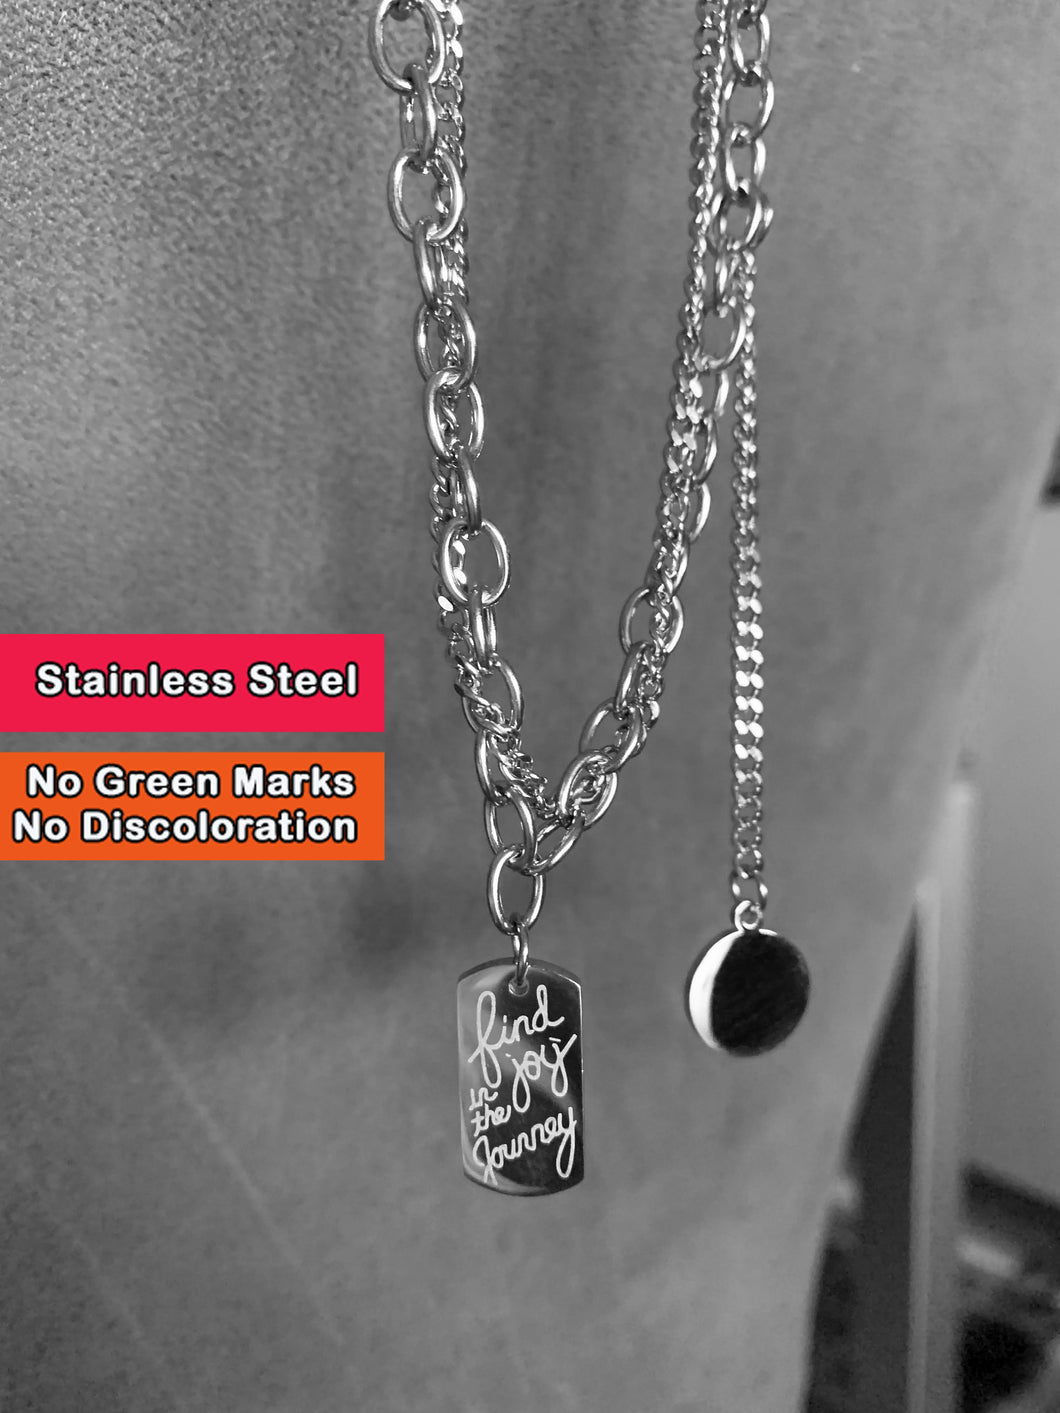 Find Joy S/Steel Silver Necklace